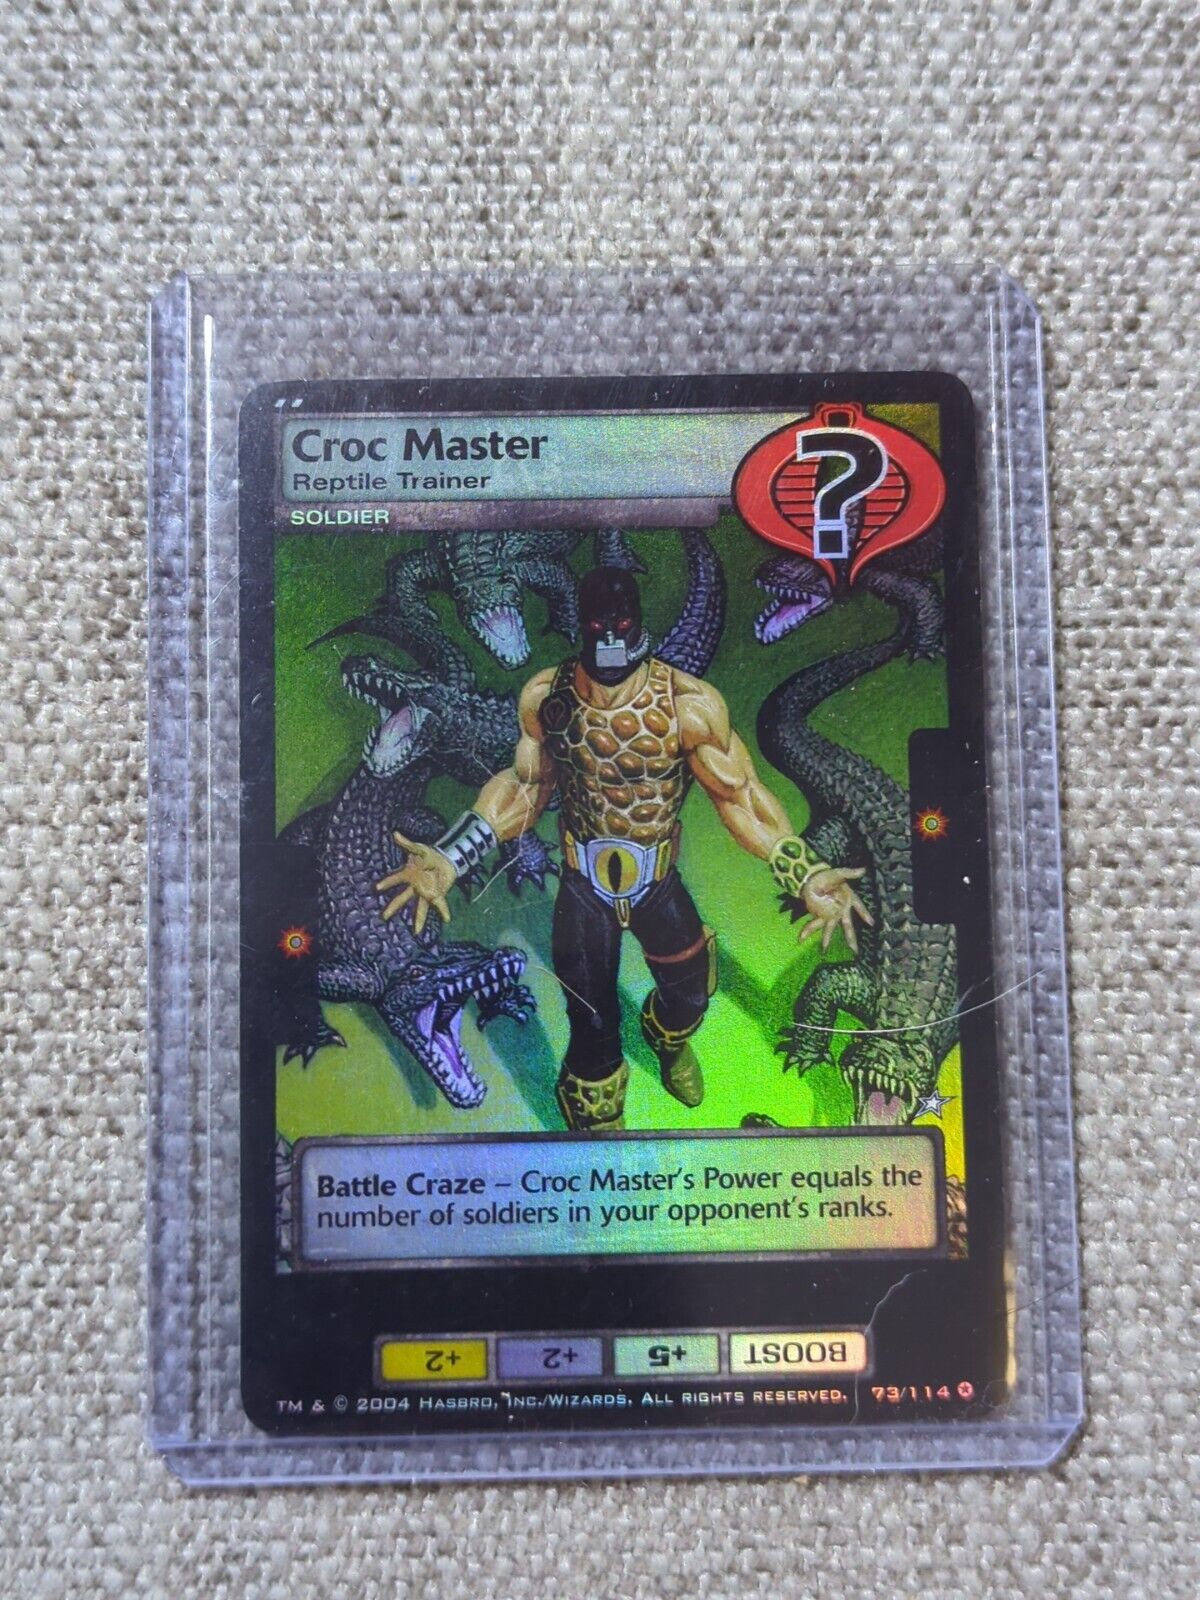 G.I. JOE Hasbro 2004 Croc Master Reptile Trainer Foil Card #73/114